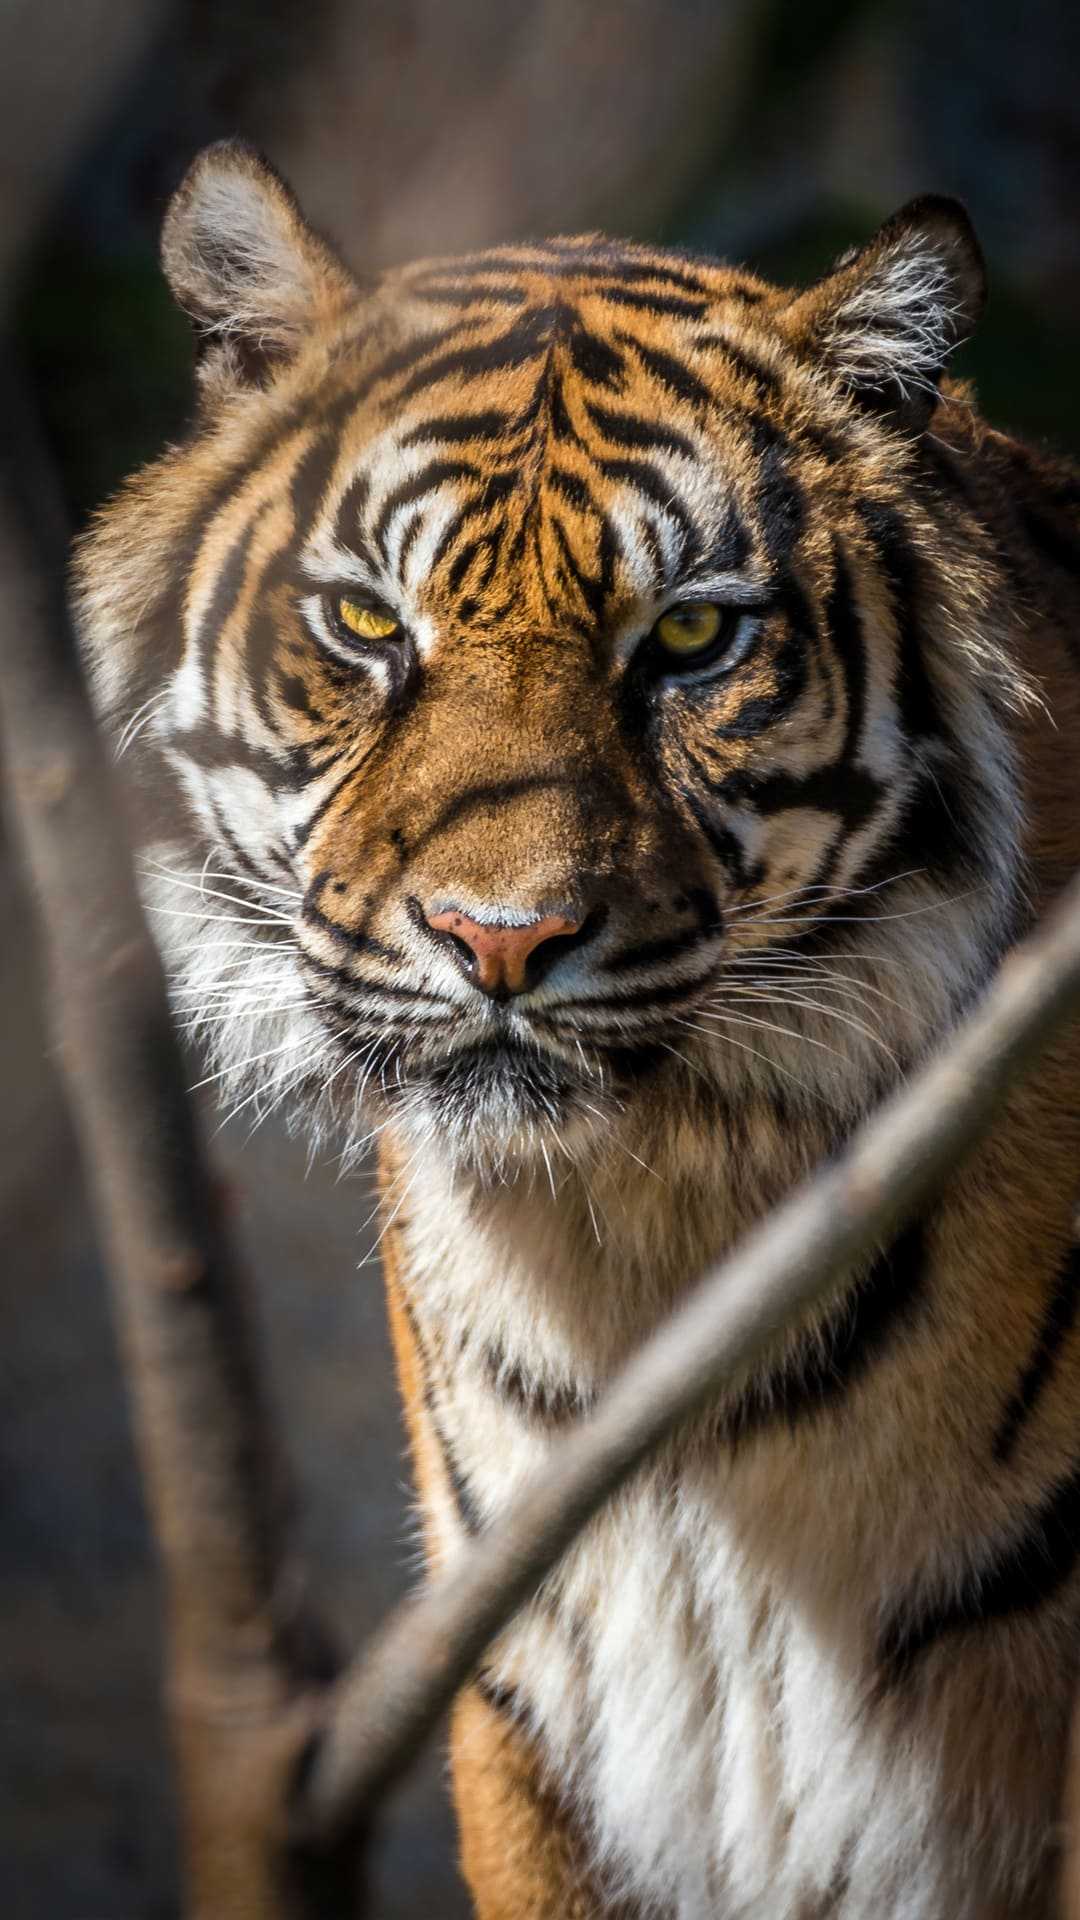 Tiger Wallpaper - NawPic